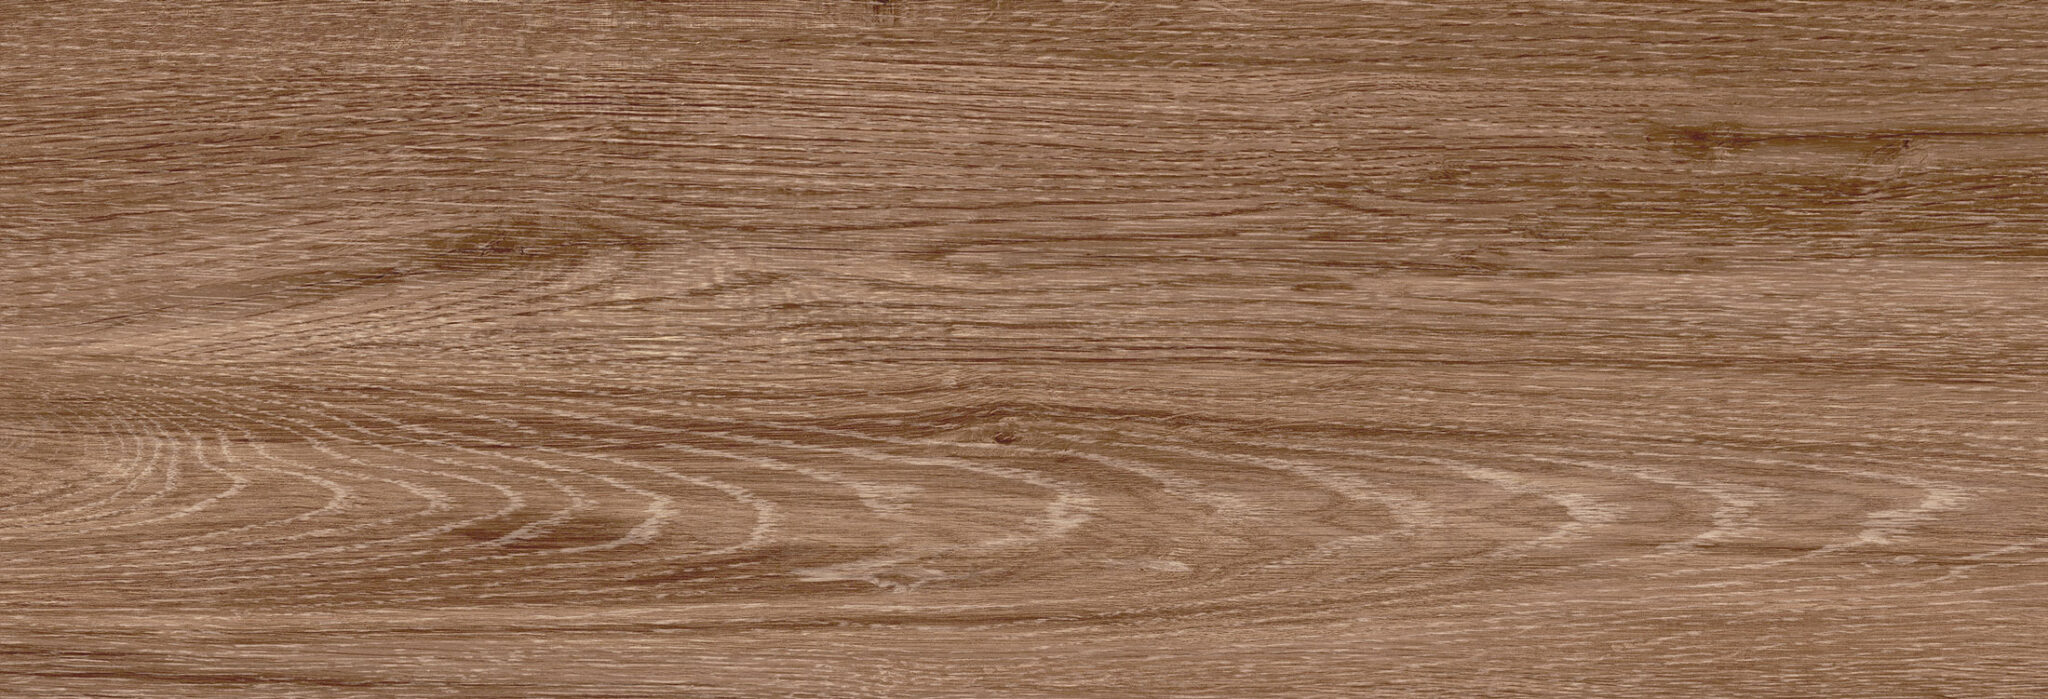 Italian Wood керамогранит коричневый g-252/SR/20x60